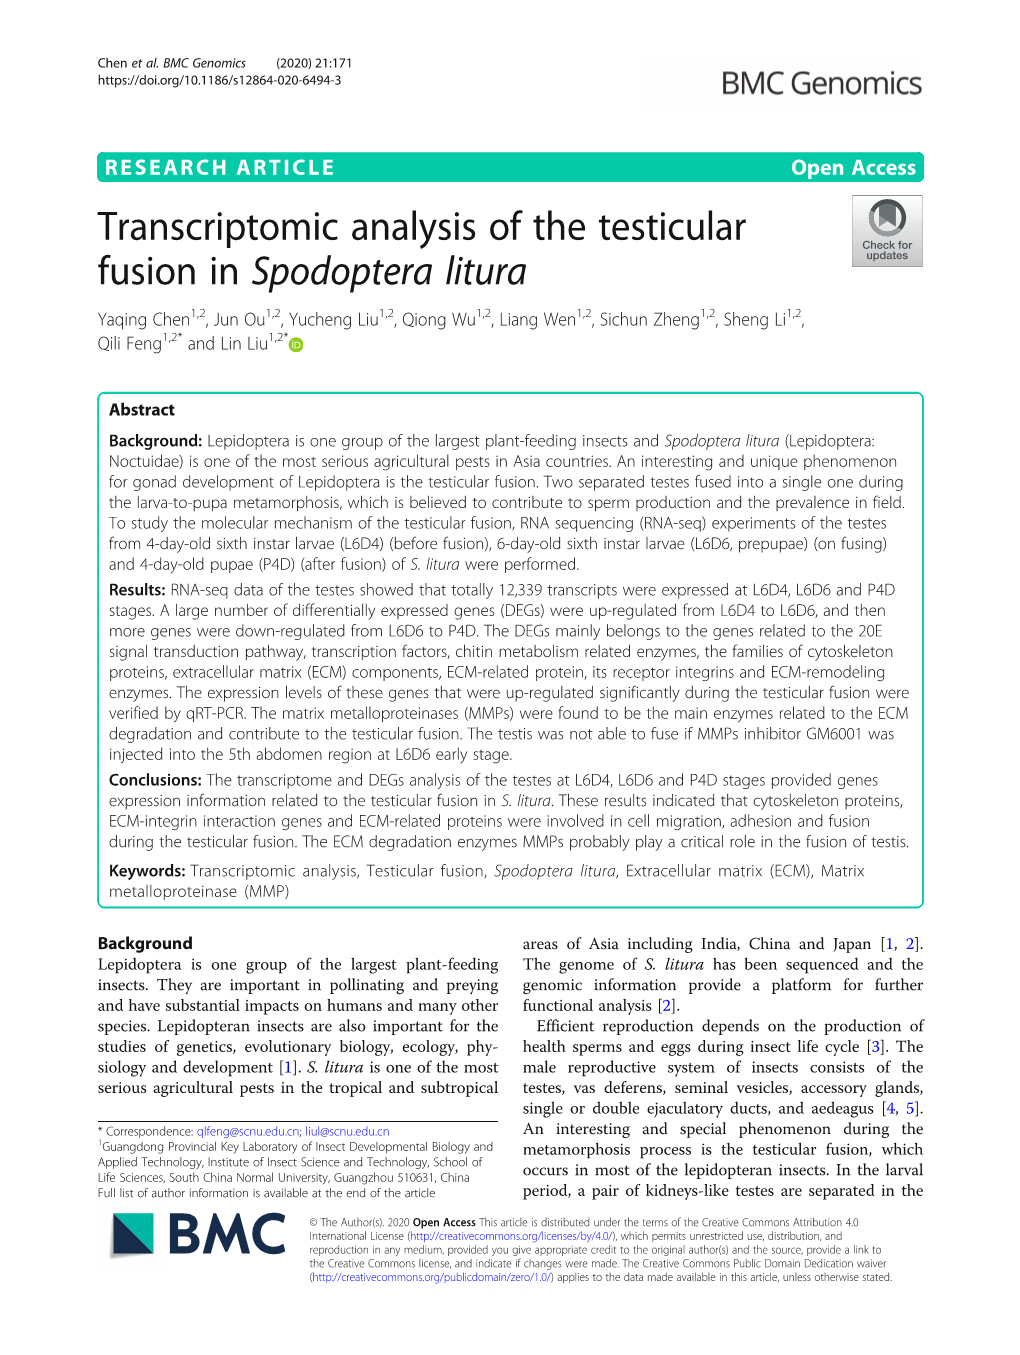 Transcriptomic Analysis of the Testicular Fusion in Spodoptera Litura